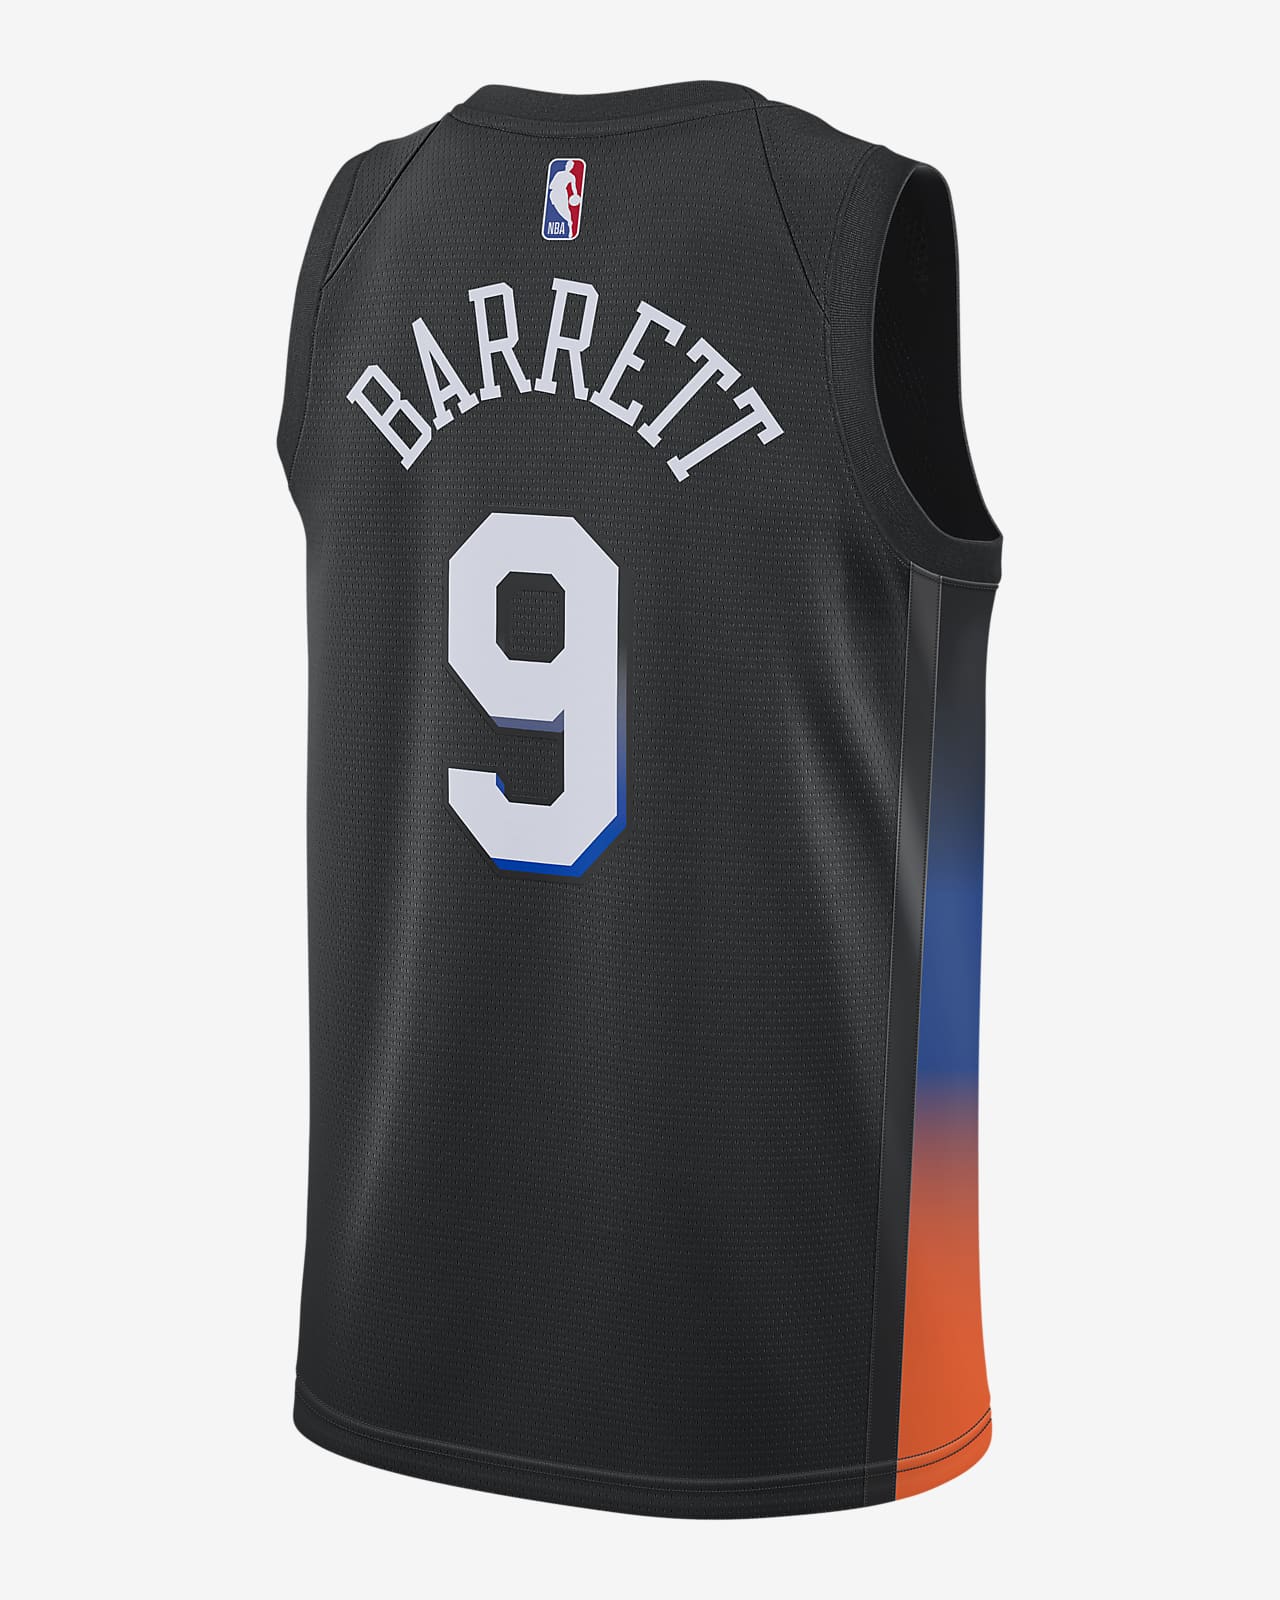 New York Knicks City Edition Nike NBA 